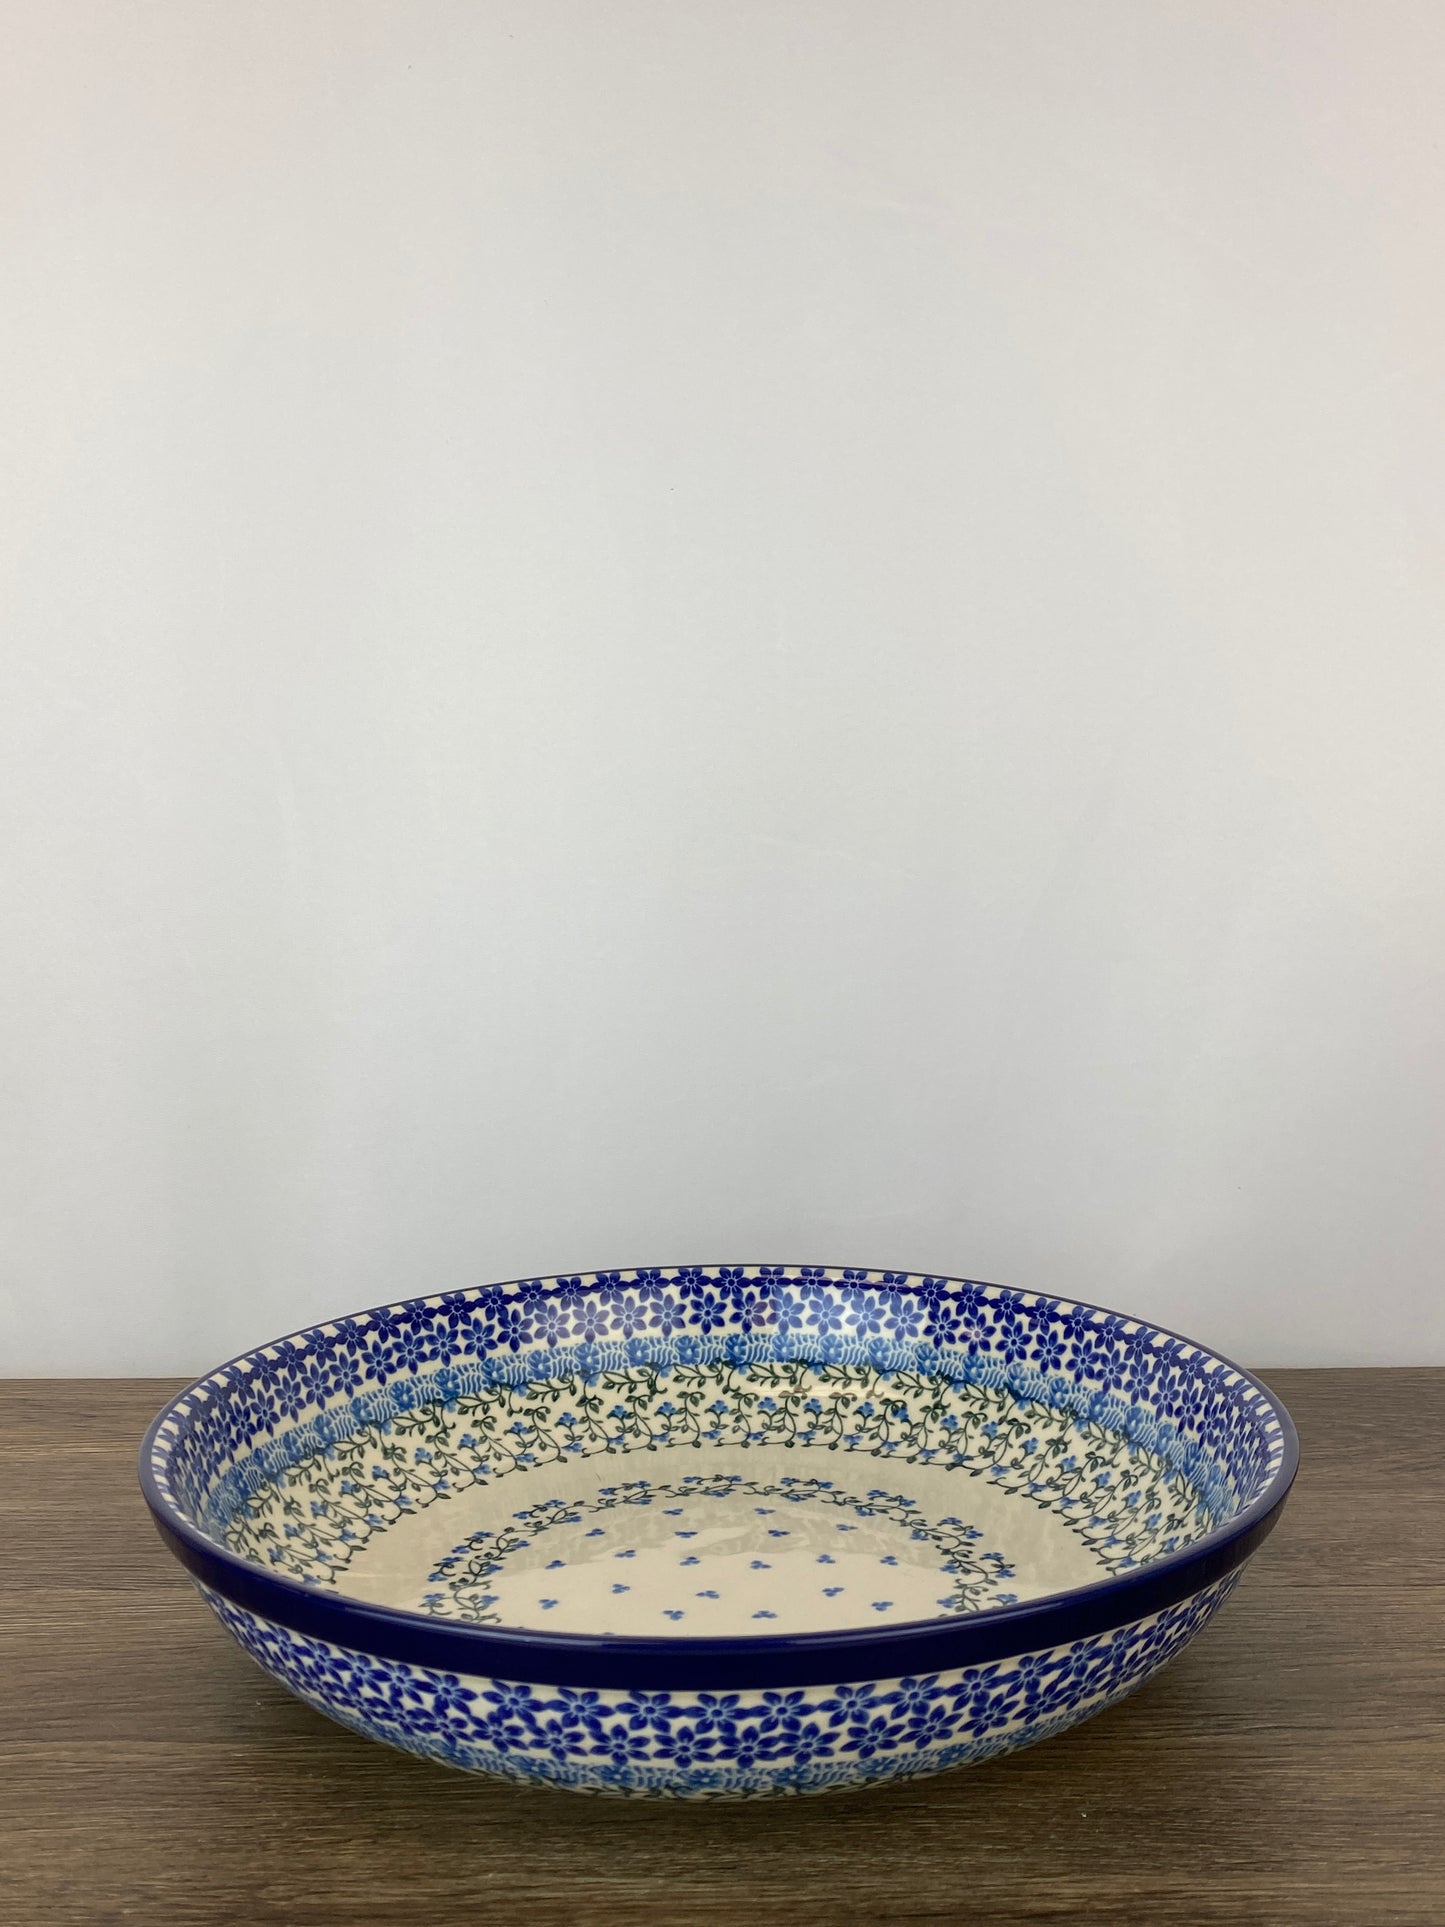 Pasta Server / Wide Shallow Bowl - Shape 115 - Pattern 1821